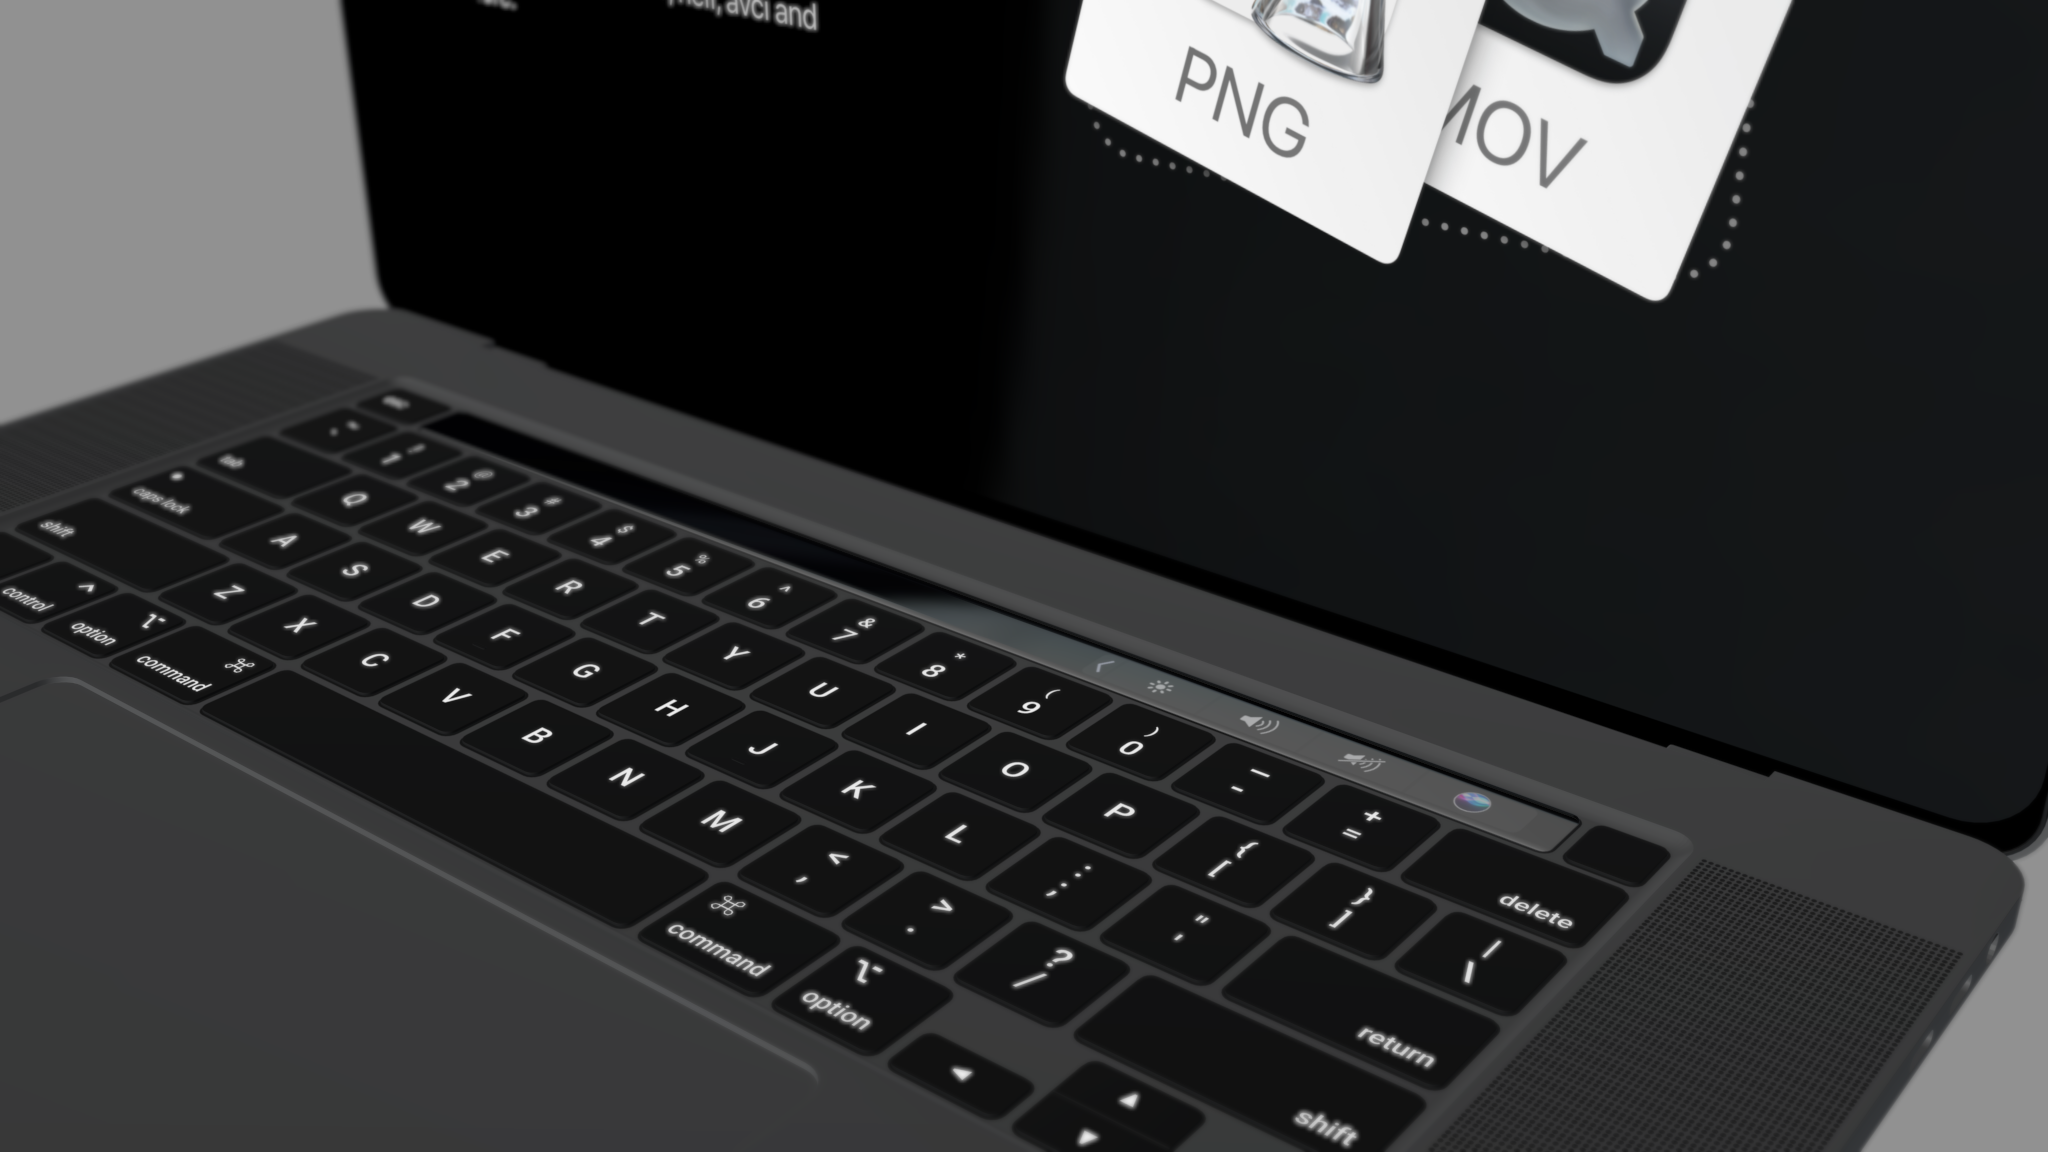 Keyboard on a dark macbook